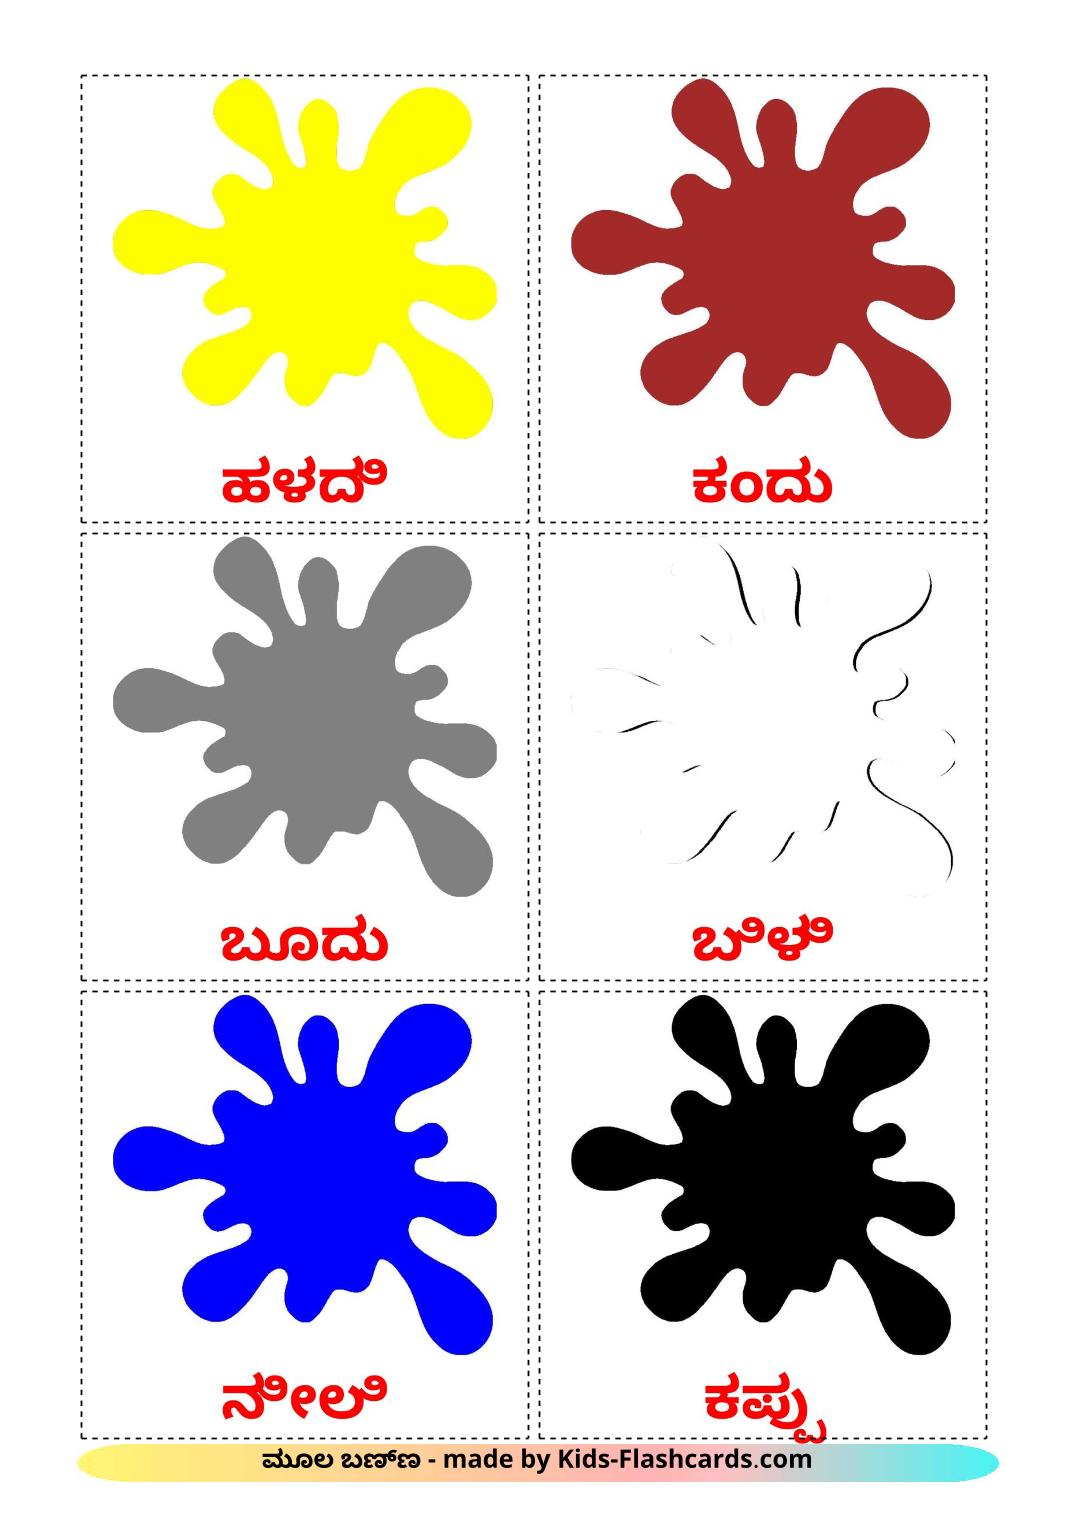 Colores - 12 fichas de kannada para imprimir gratis 